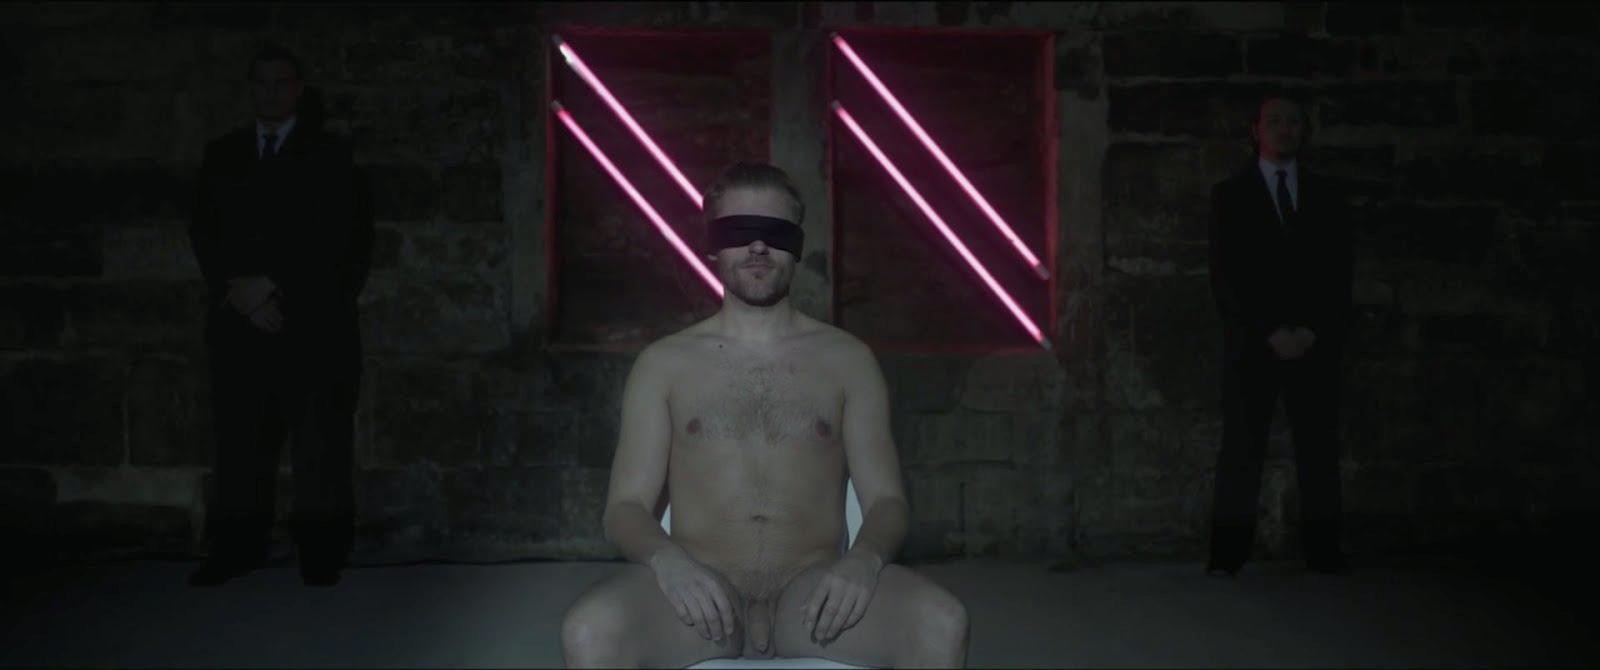 Jens Atzorn nudo in "Avalanche" (2017) .